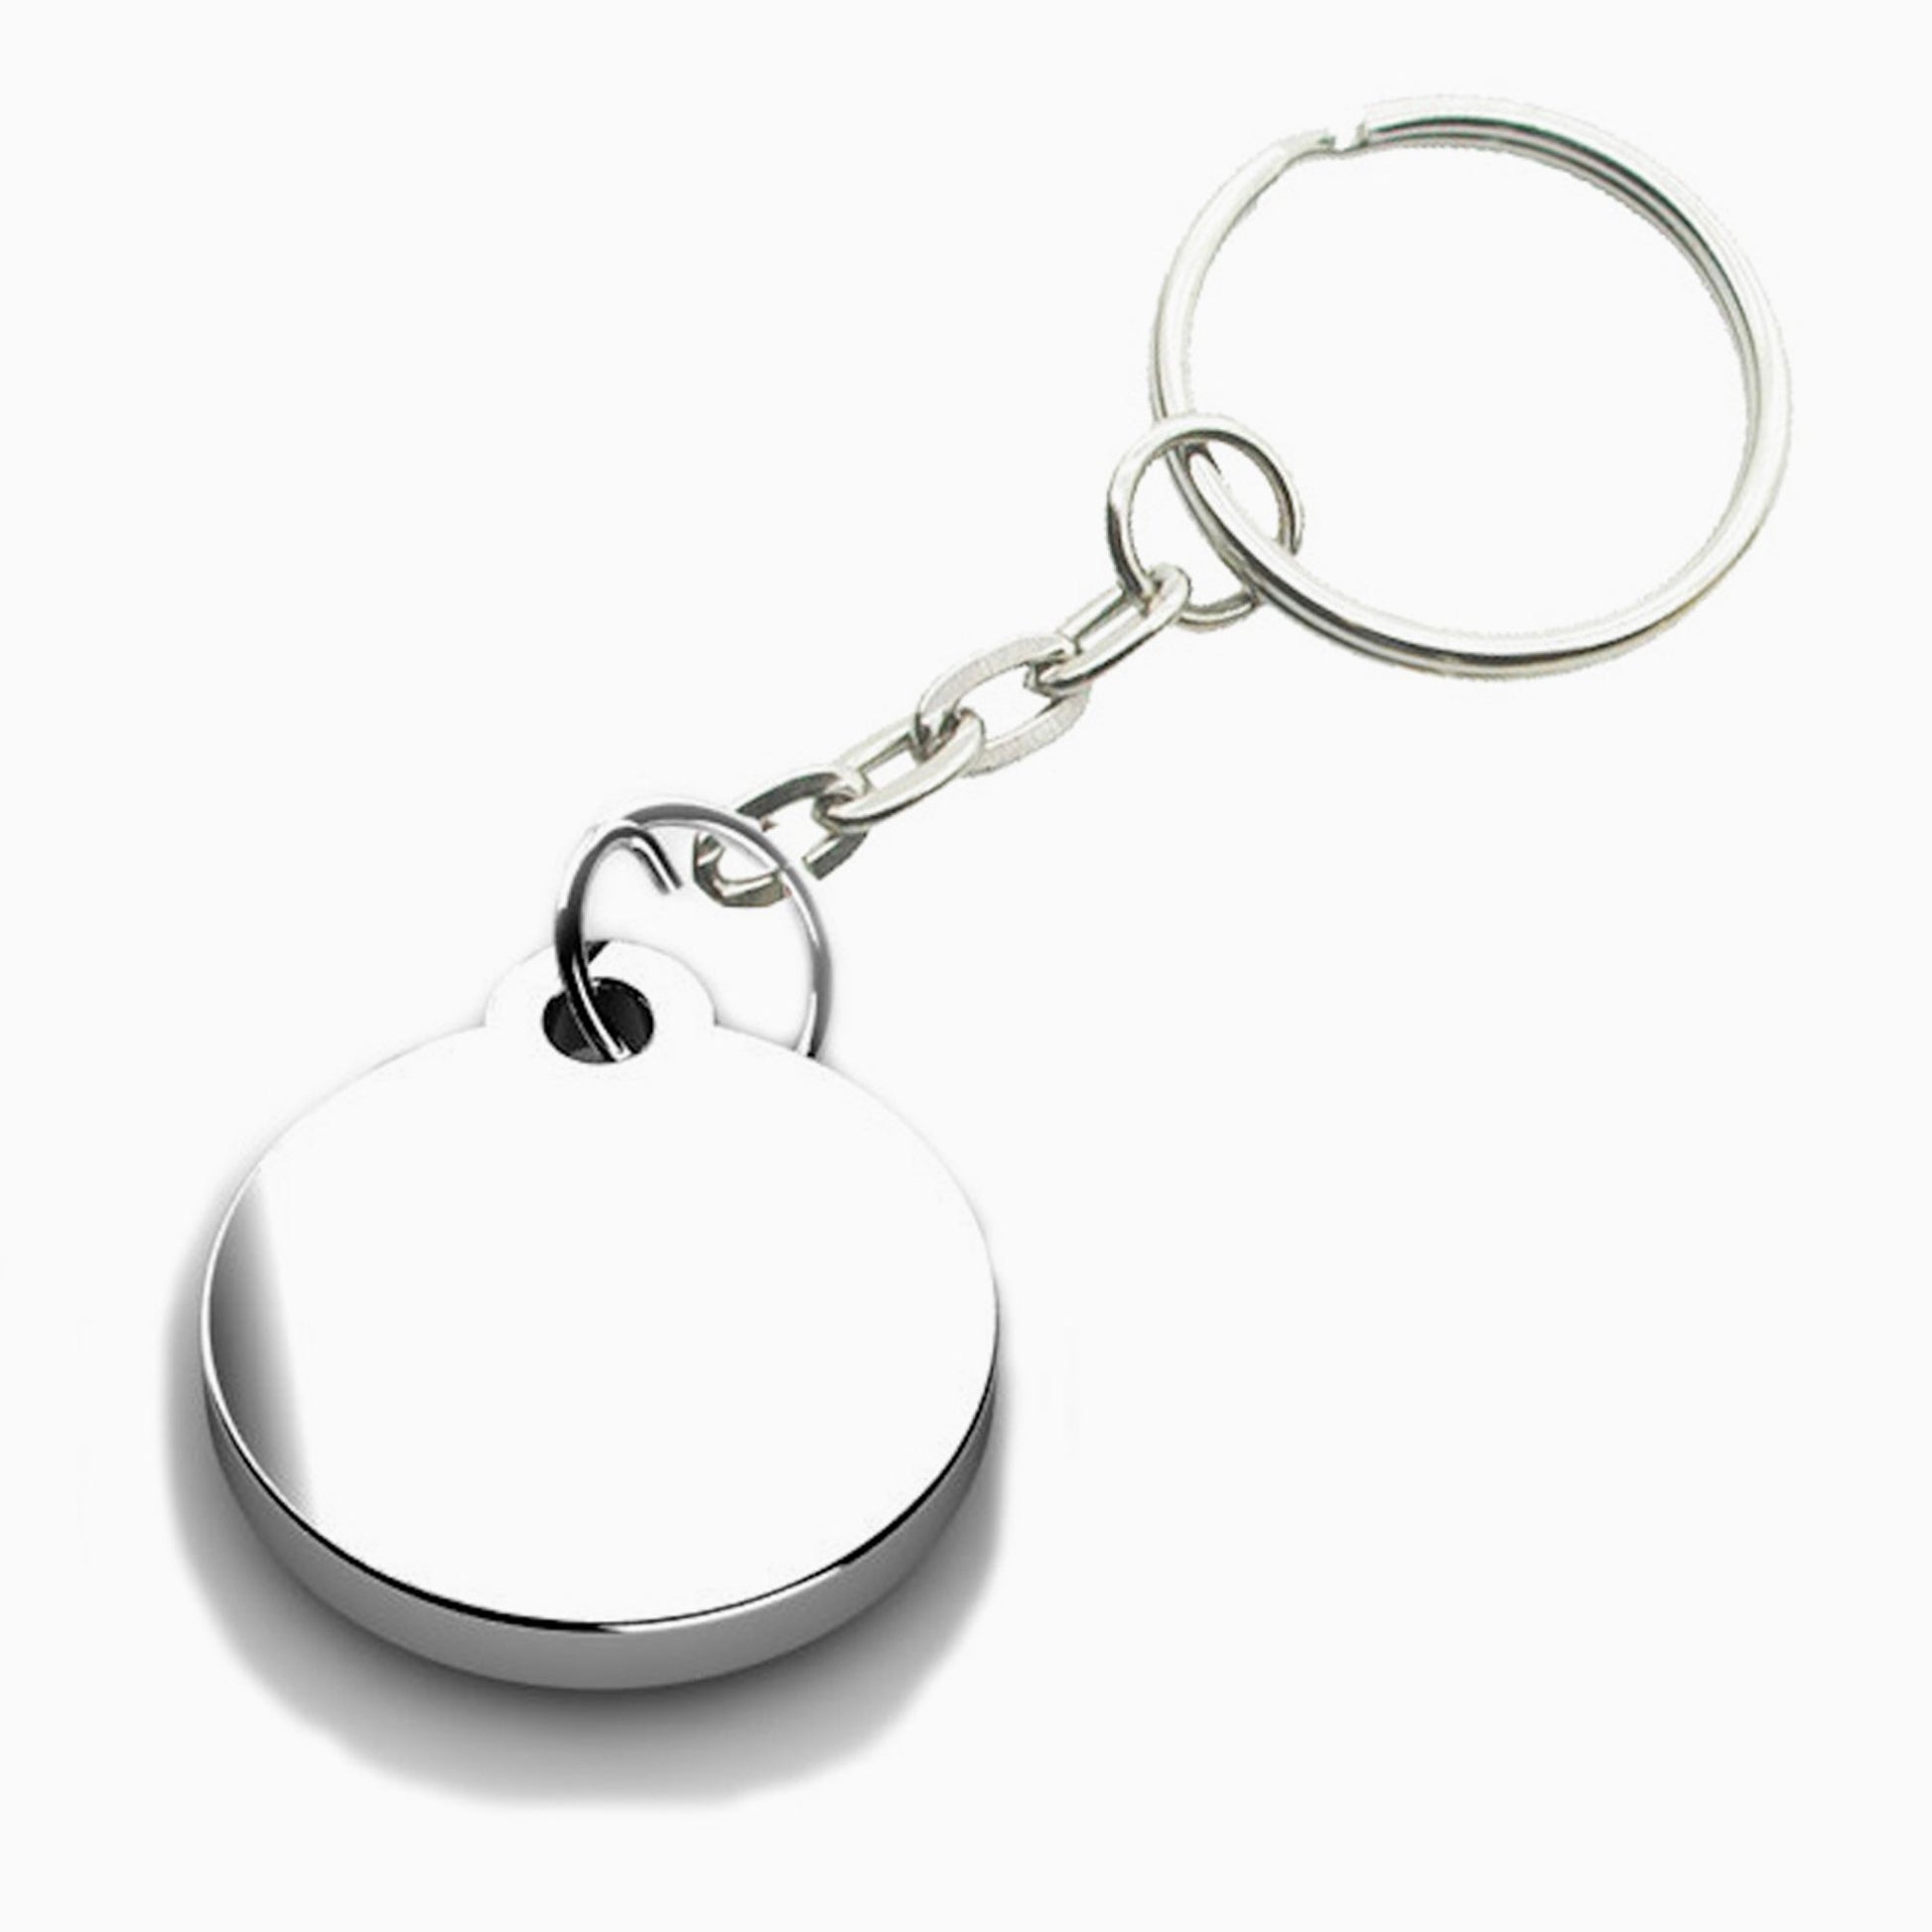 Round Enamel Sterling Silver Keychain by Krysaliis